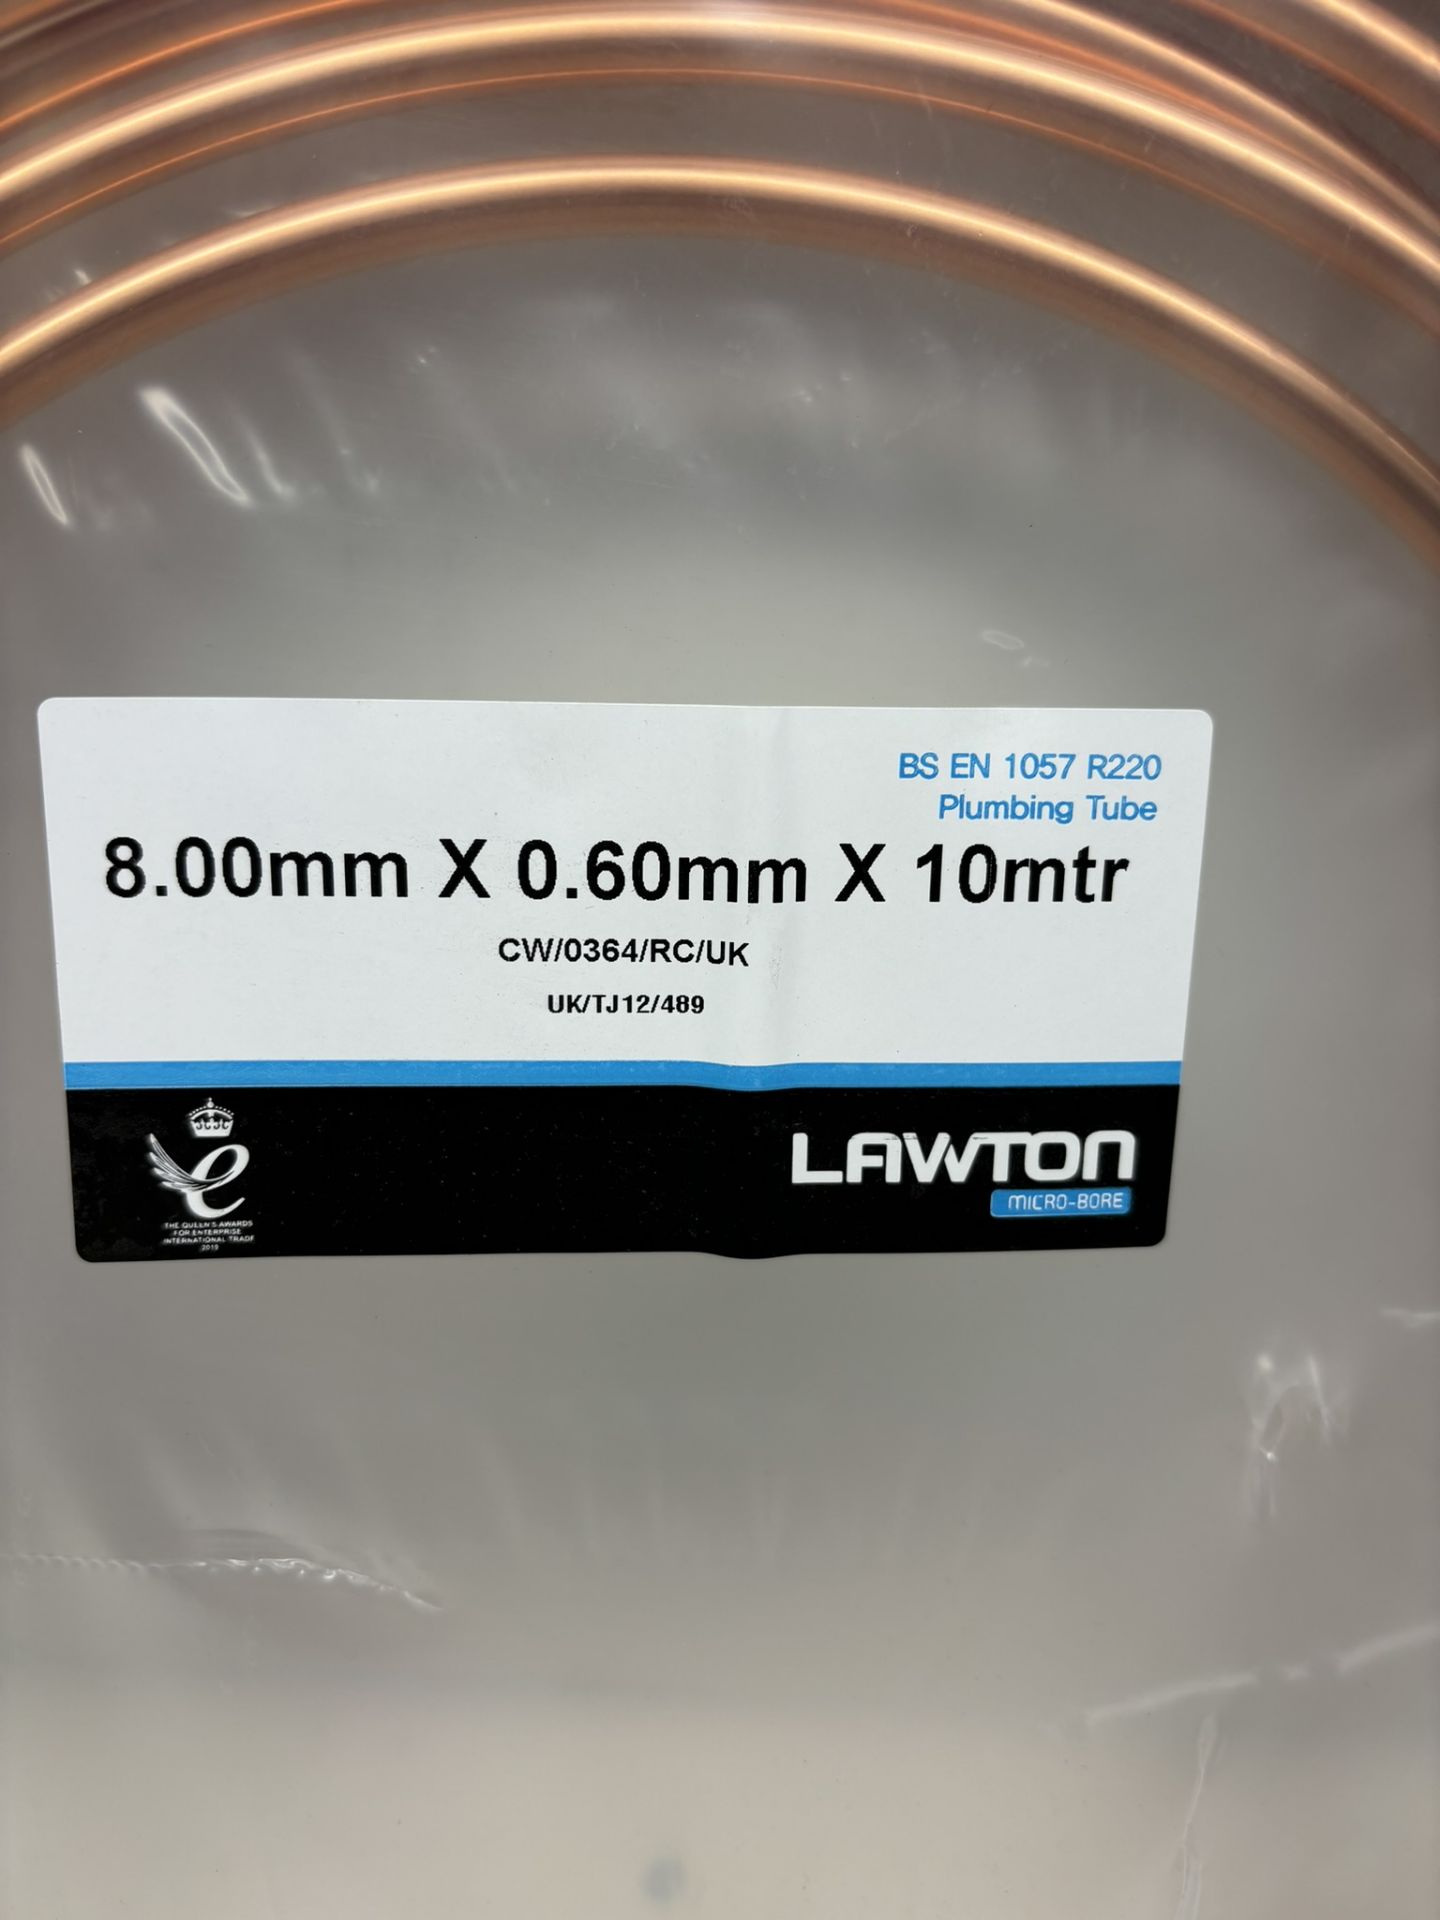 5 x Lawton 8.00mm x 0.60mm x 10Mtr Copper Plumbing Tube Coils - Image 7 of 9